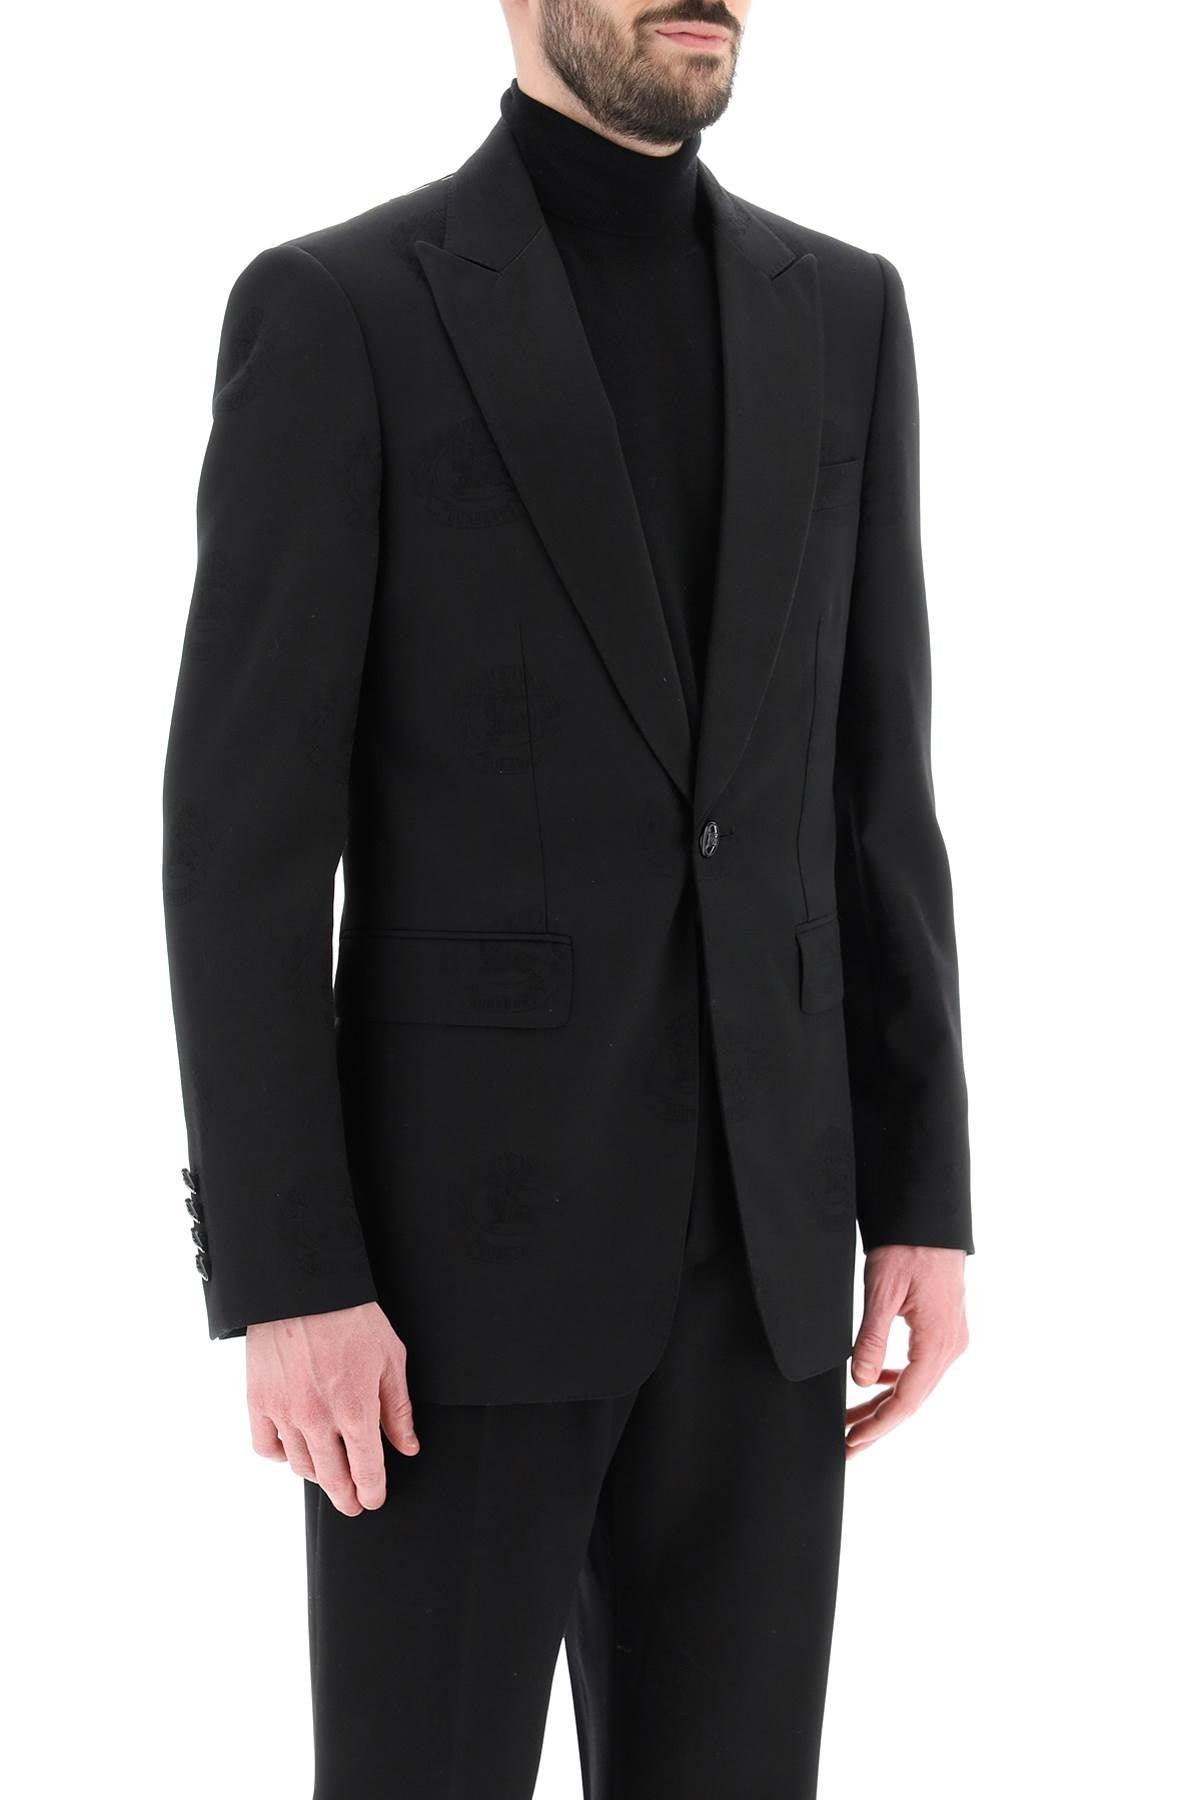 Burberry Tuxedo Jacket With Jacquard Details - JOHN JULIA